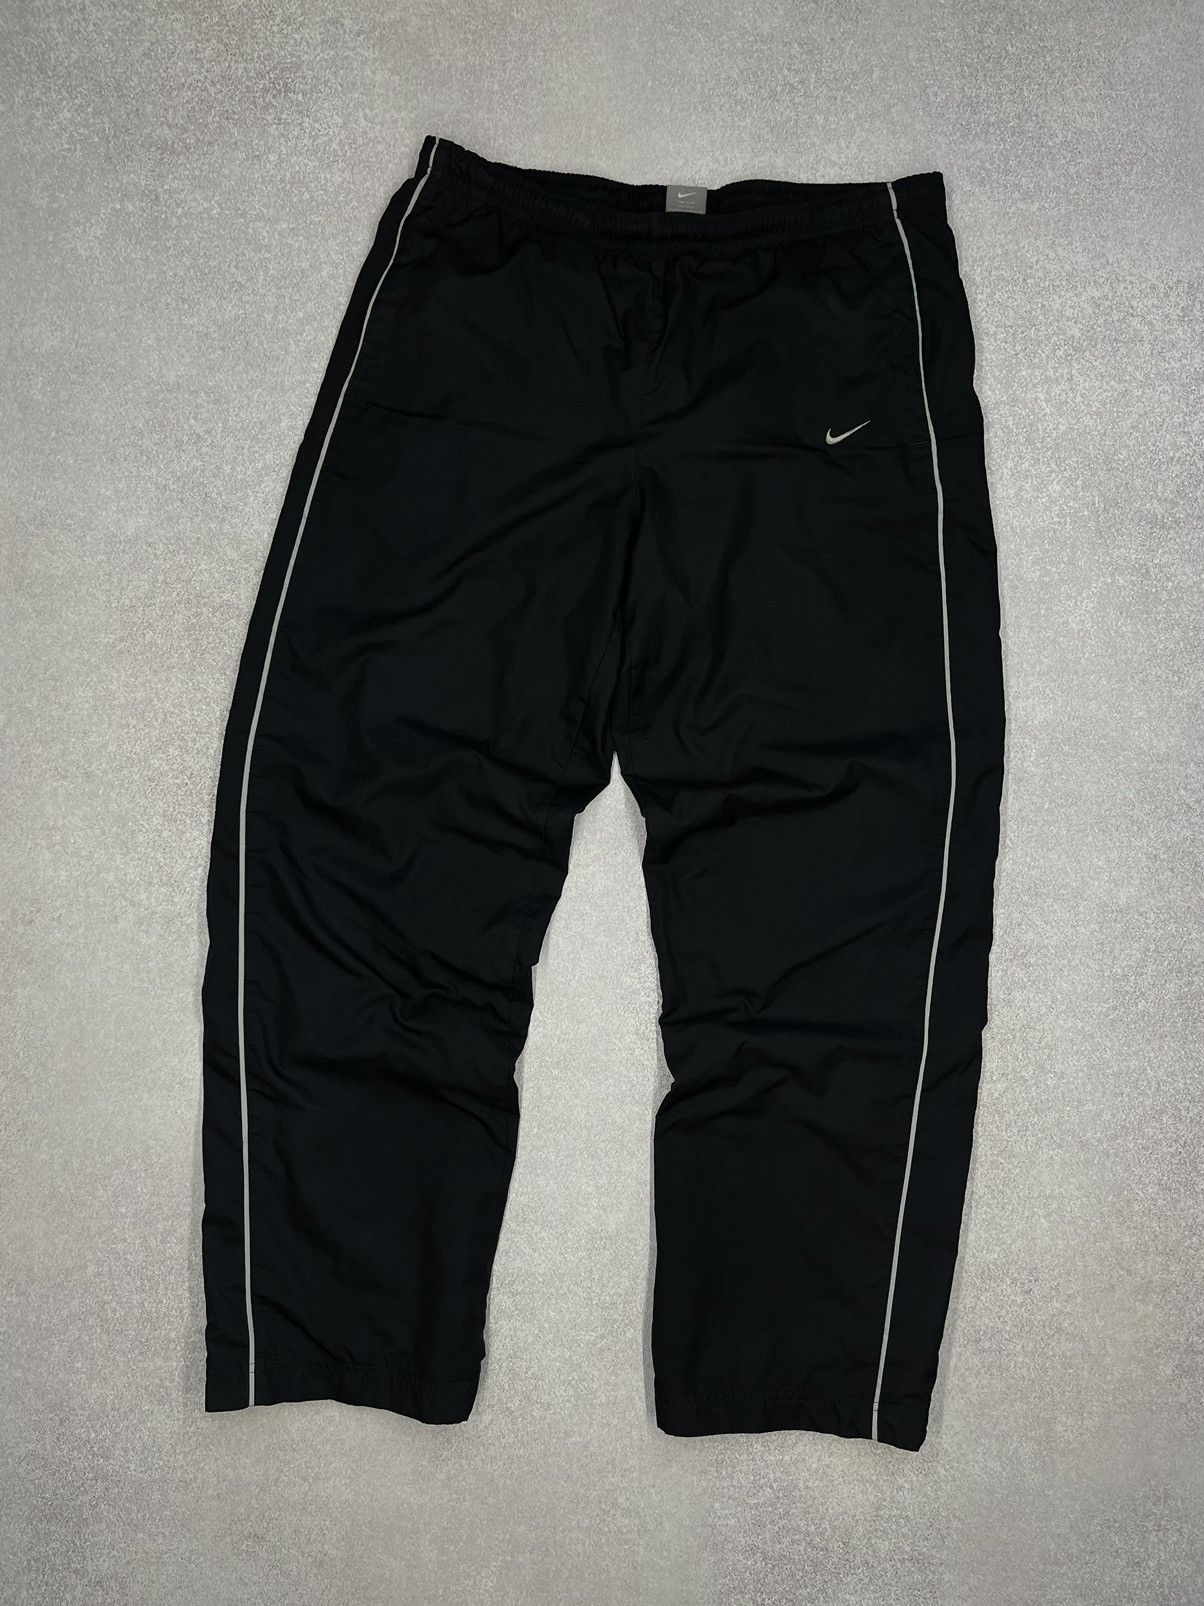 Nike, Pants, Vintage Y2k Nike Basketball Warm Up Pants Mens Black Striped  Pockets Zip Ankle